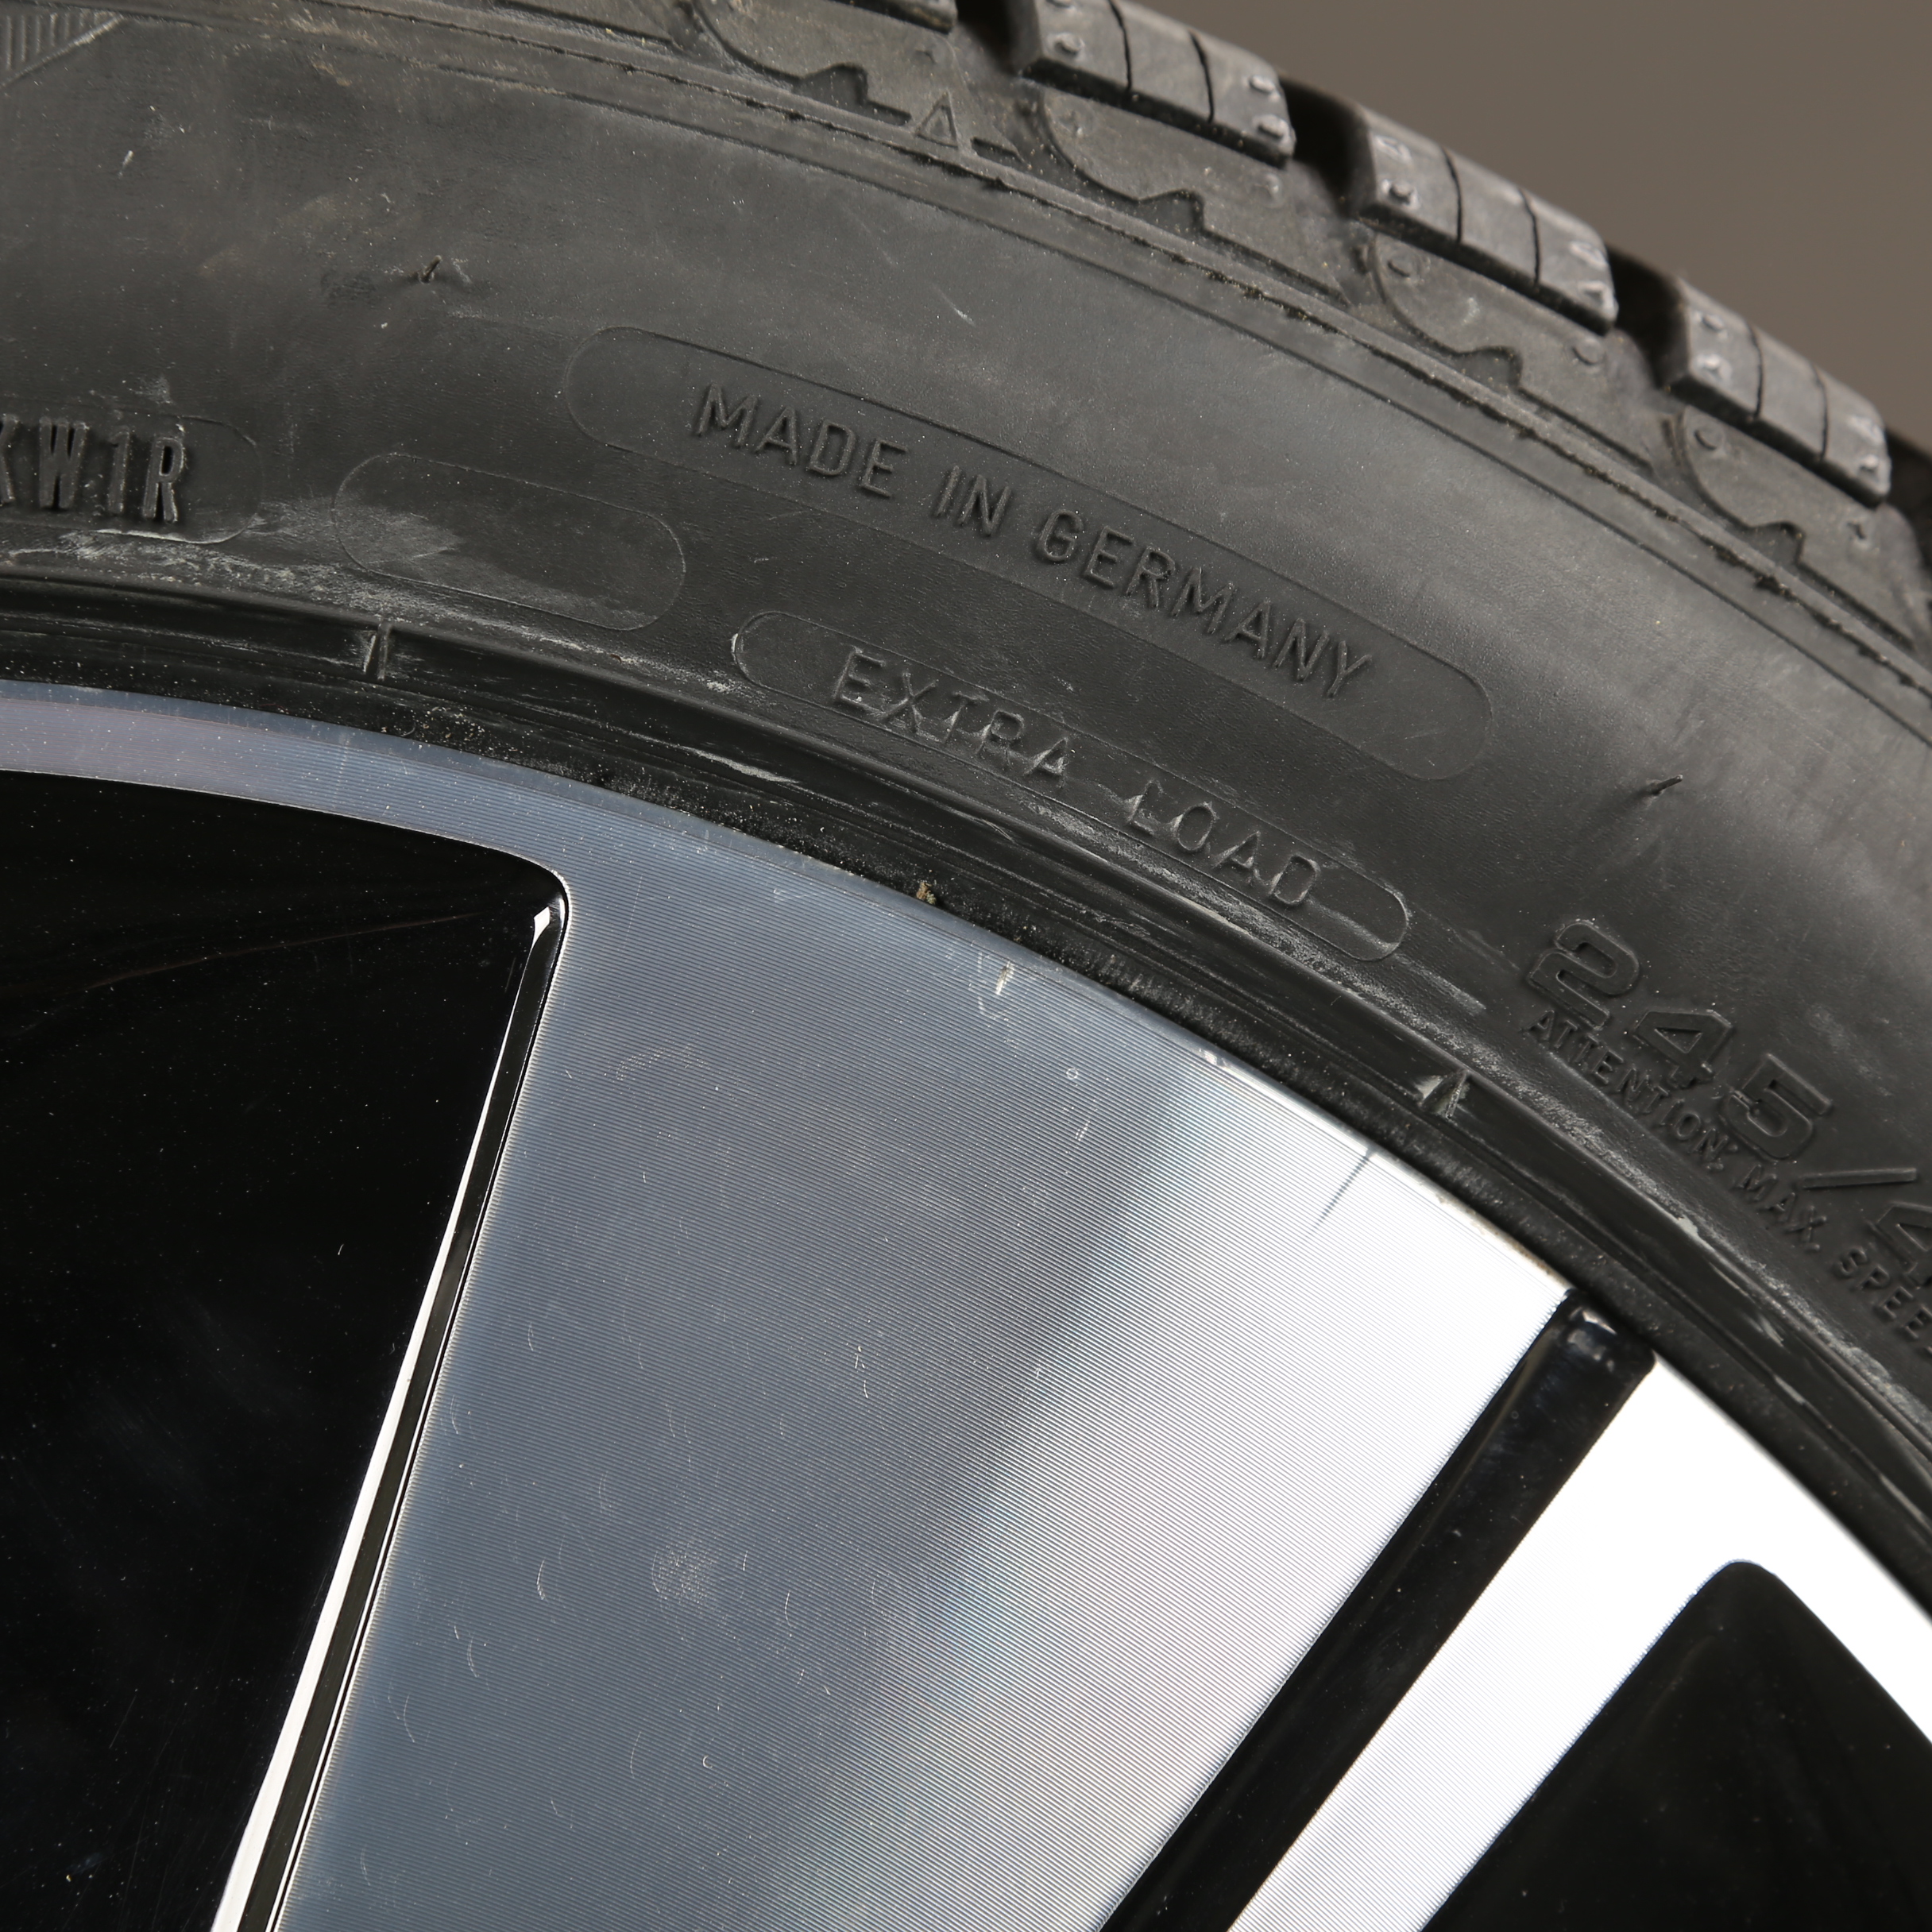 18-inch winter wheels original Mercedes V-Class W447 A4484010900 A4474015500